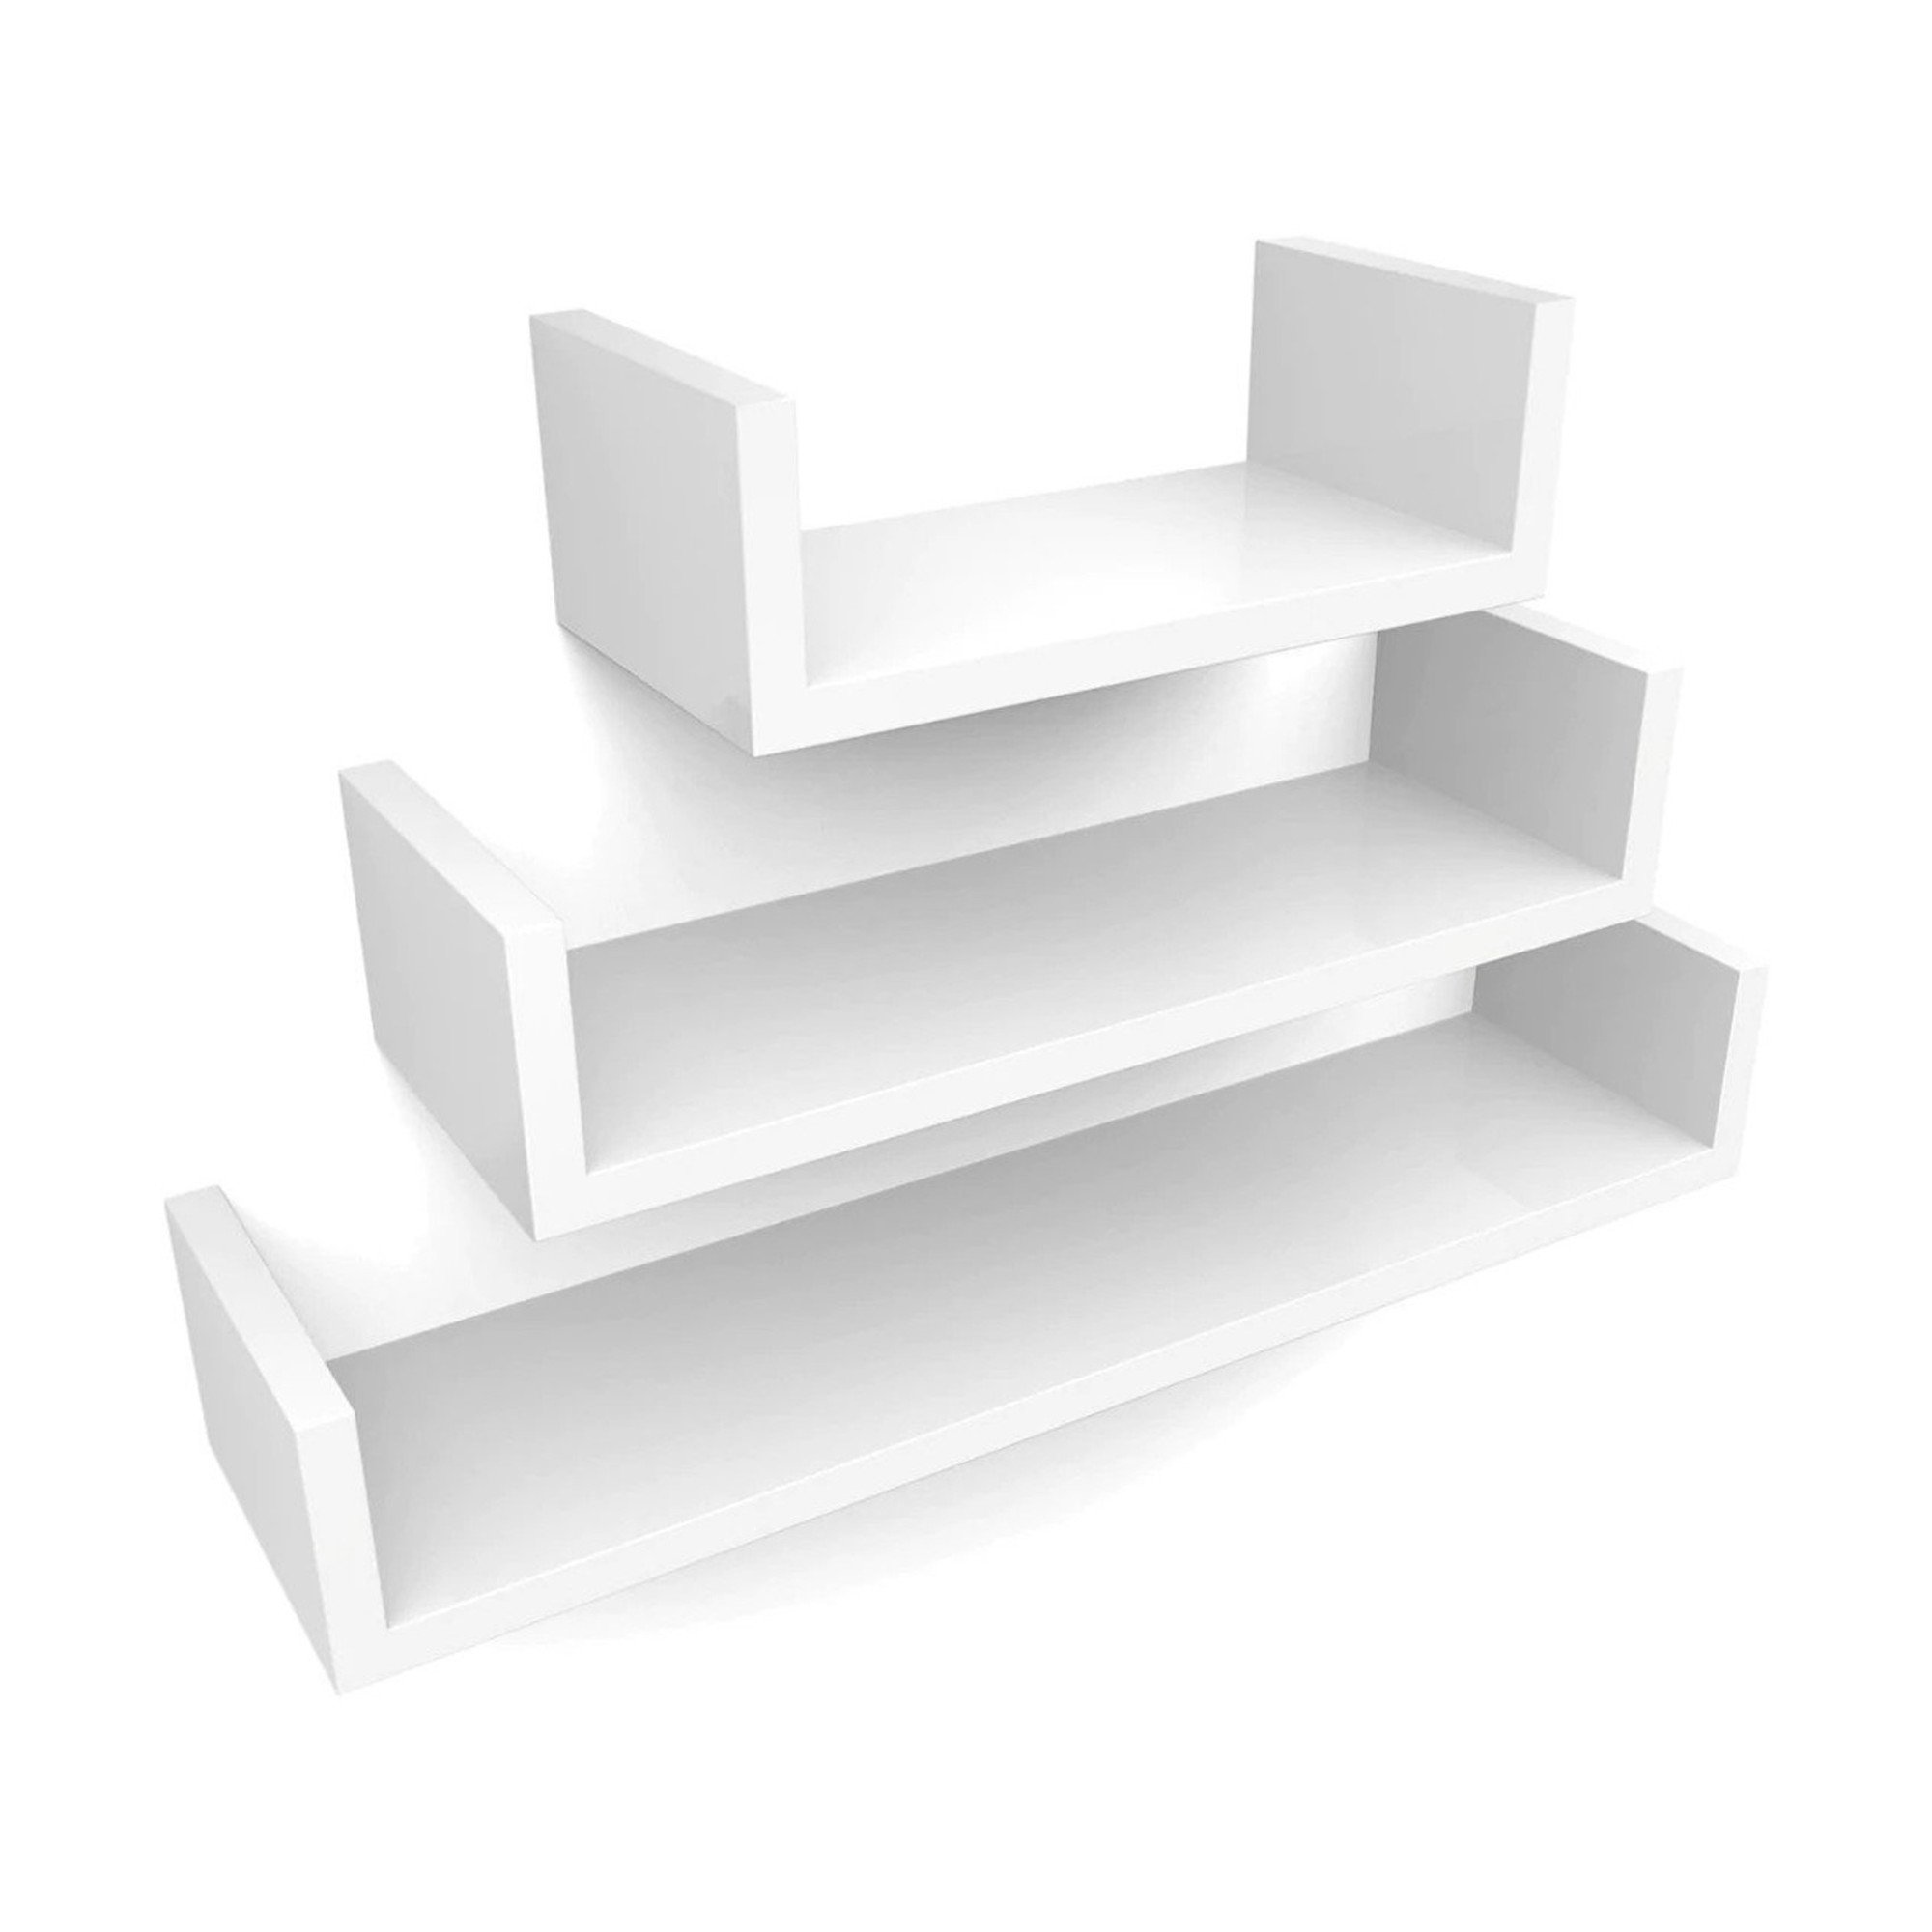 Set of 3 White U-Shaped Floating Wooden MDF Wall Shelves DIY Home Storage